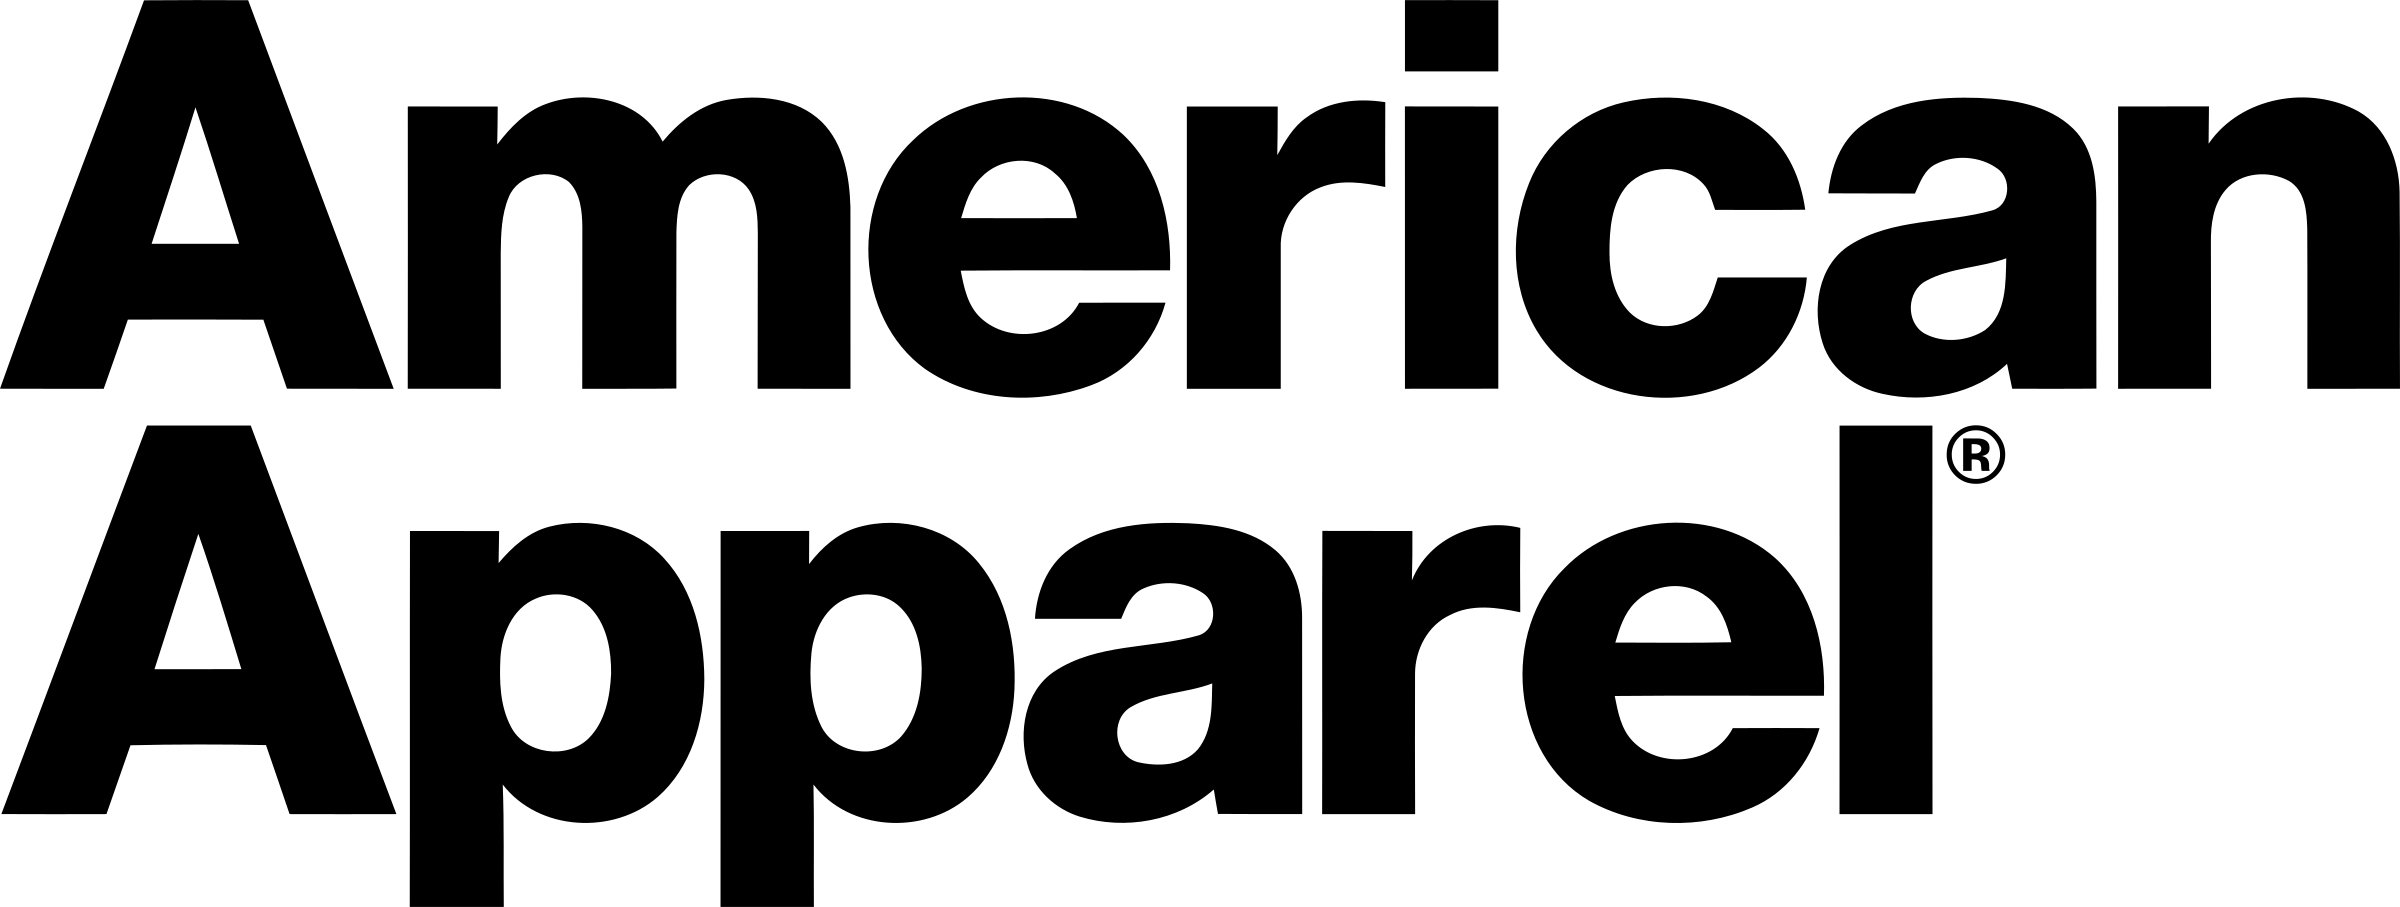 American Apparel Brand Logo - American Apparel Logo SVG Vector & PNG Transparent Logo Supply